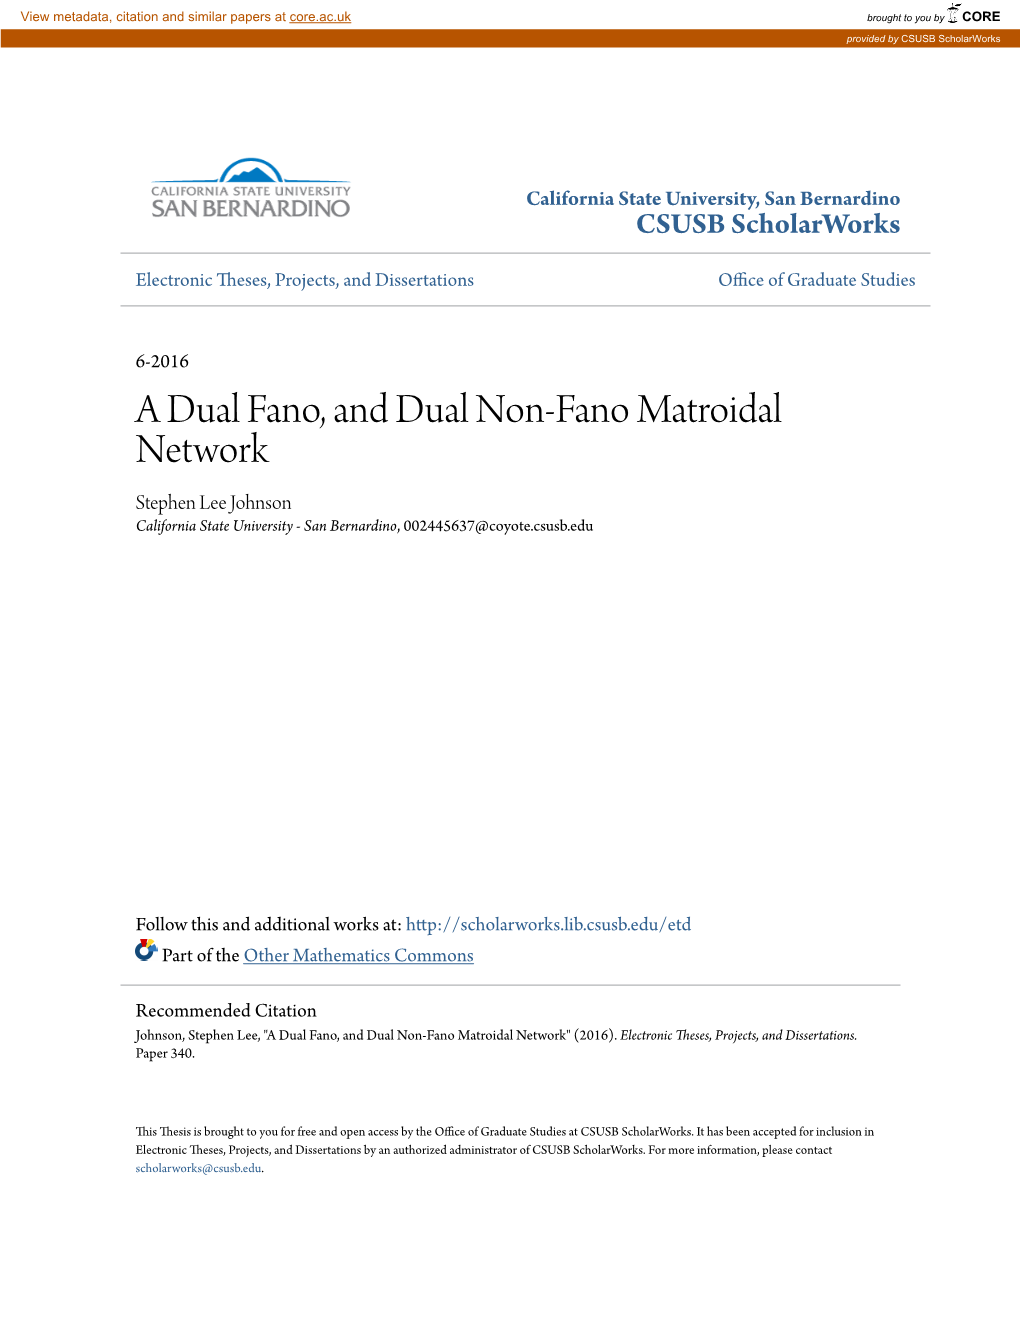 A Dual Fano, and Dual Non-Fano Matroidal Network Stephen Lee Johnson California State University - San Bernardino, 002445637@Coyote.Csusb.Edu